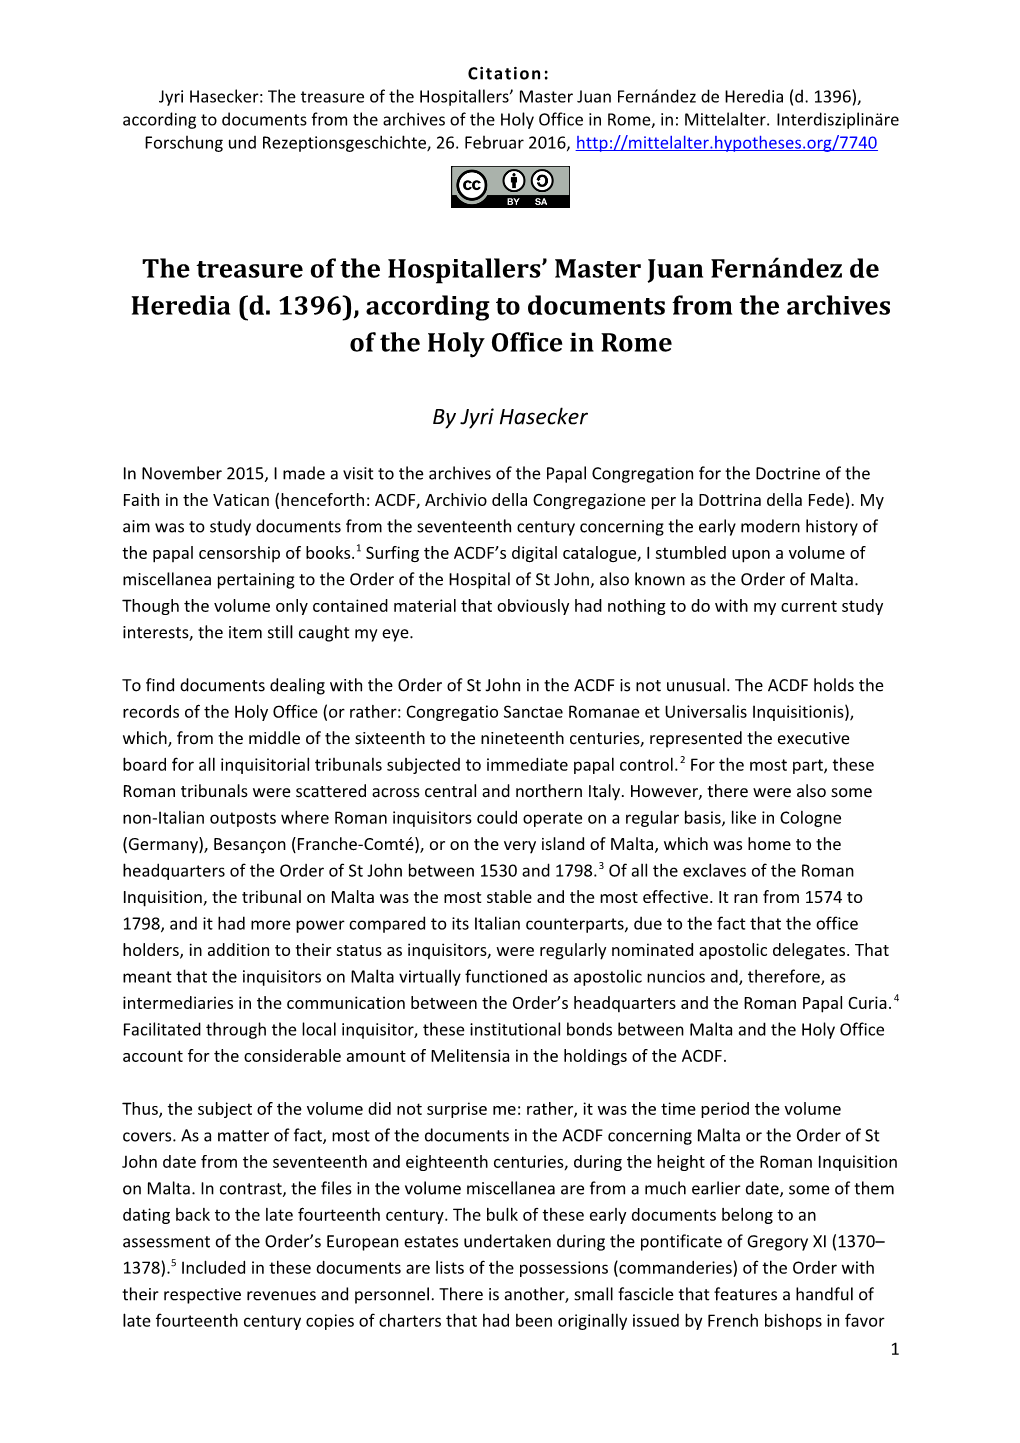 The Treasure of the Hospitallers' Master Juan